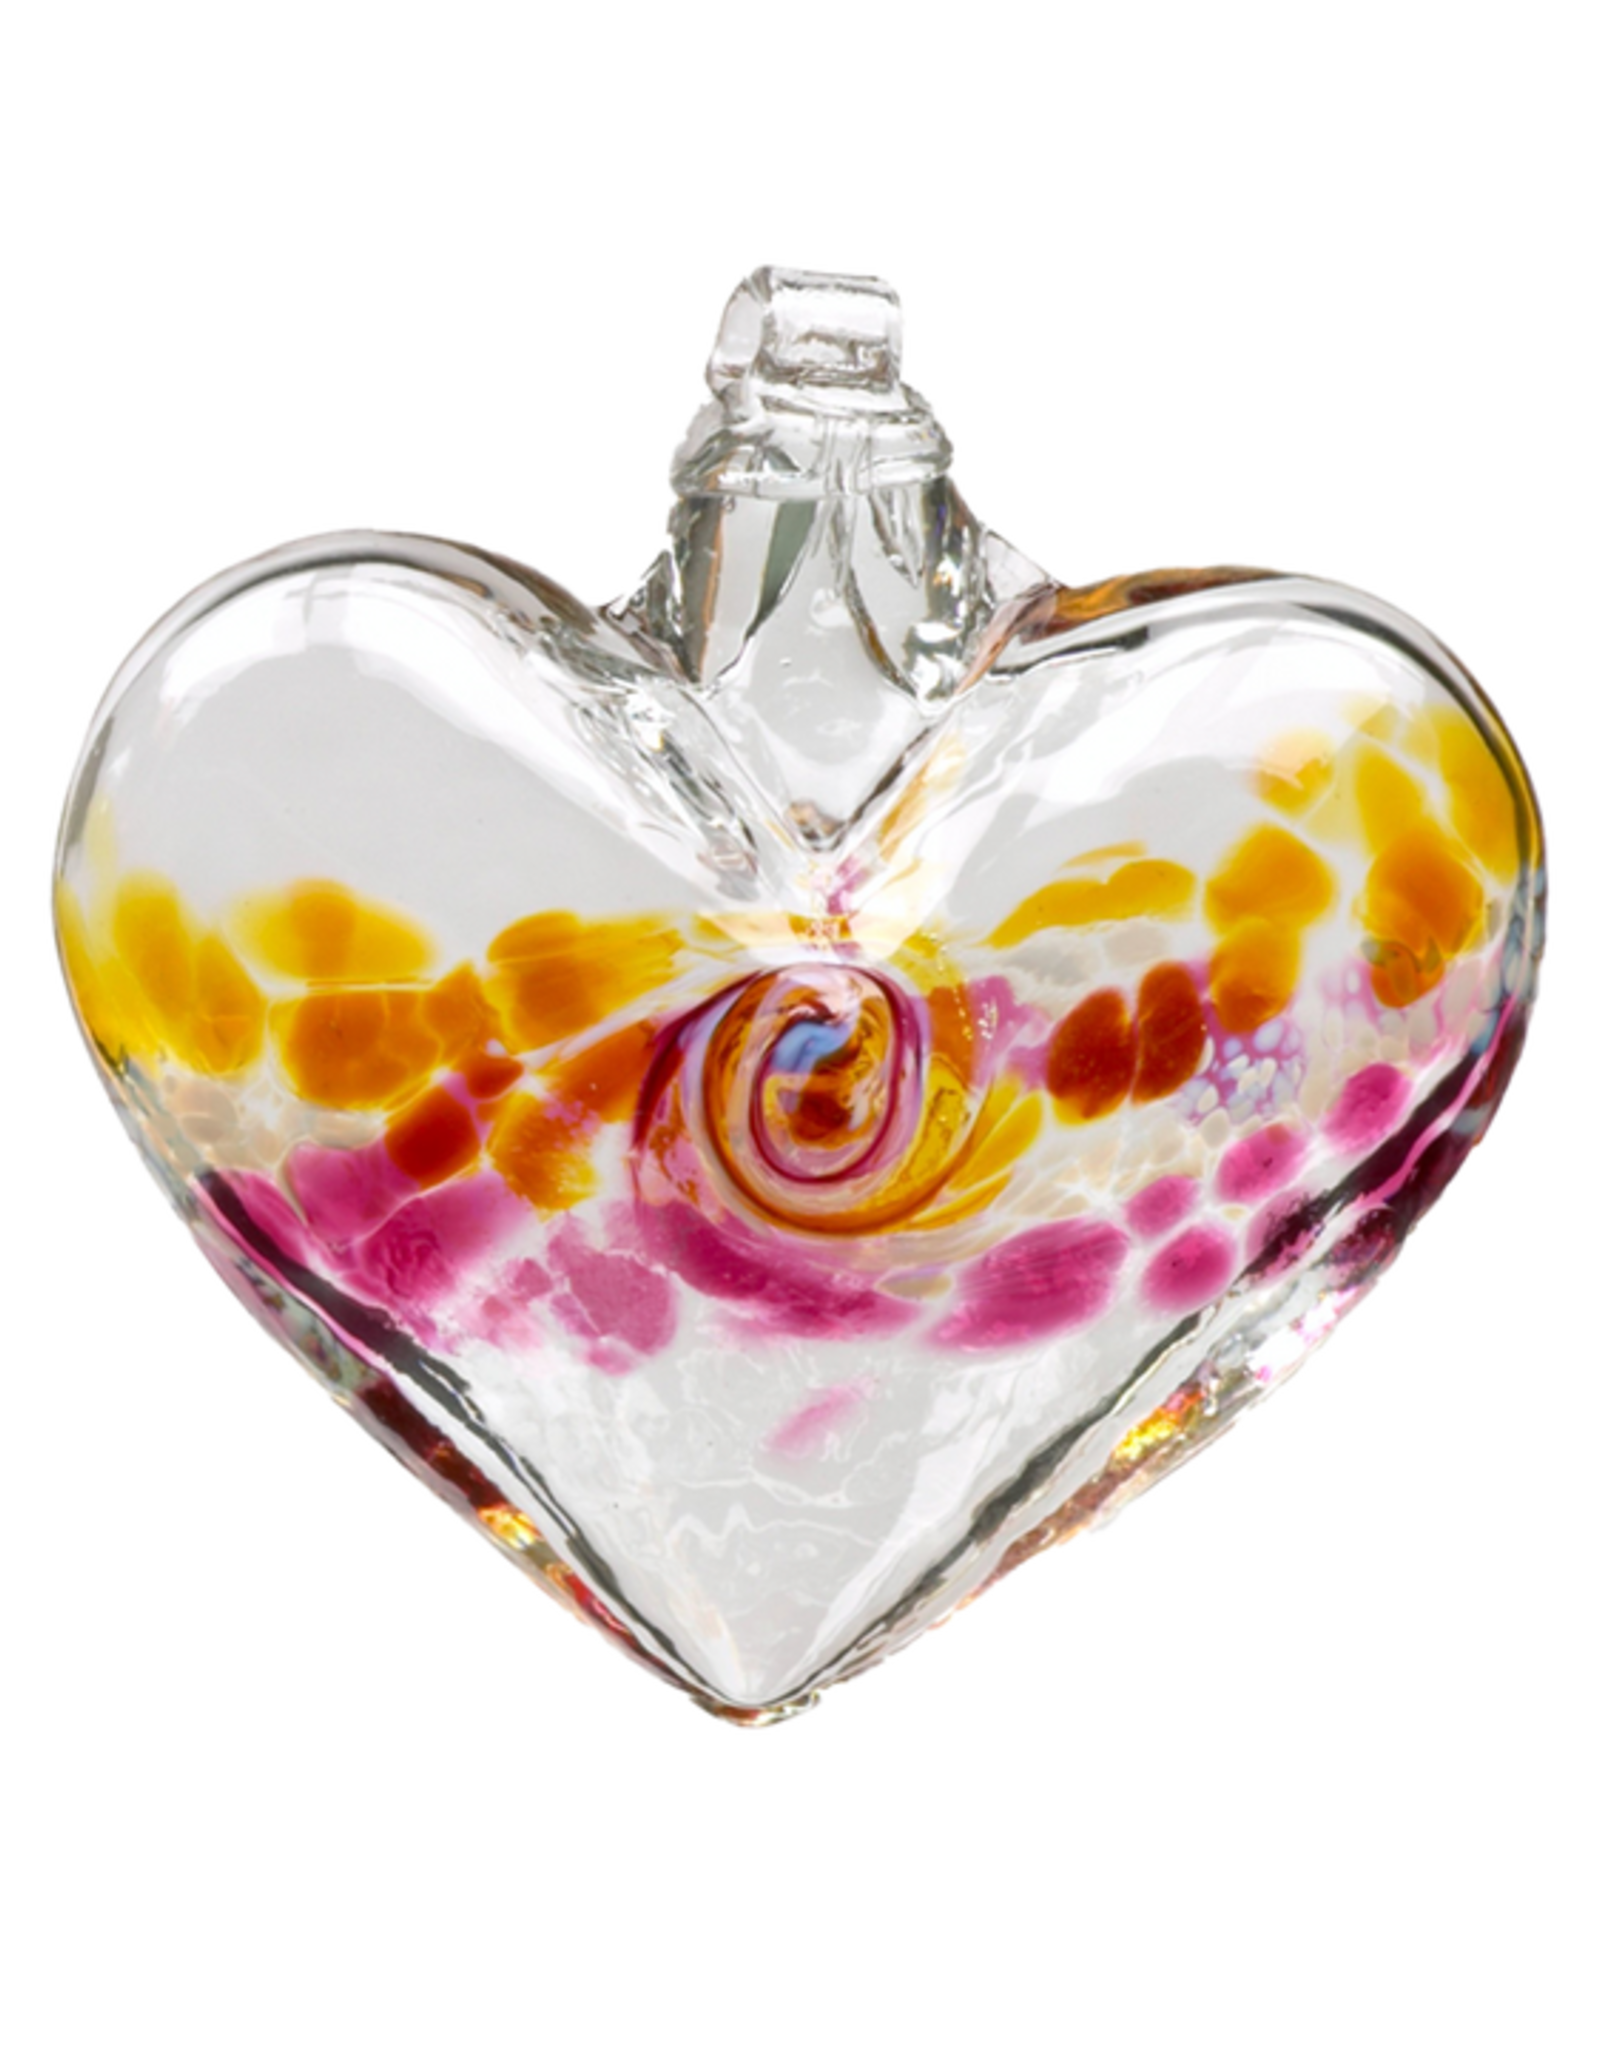 Kitras Art Glass VanGlow Heart glass Kitras - Gold/Pink